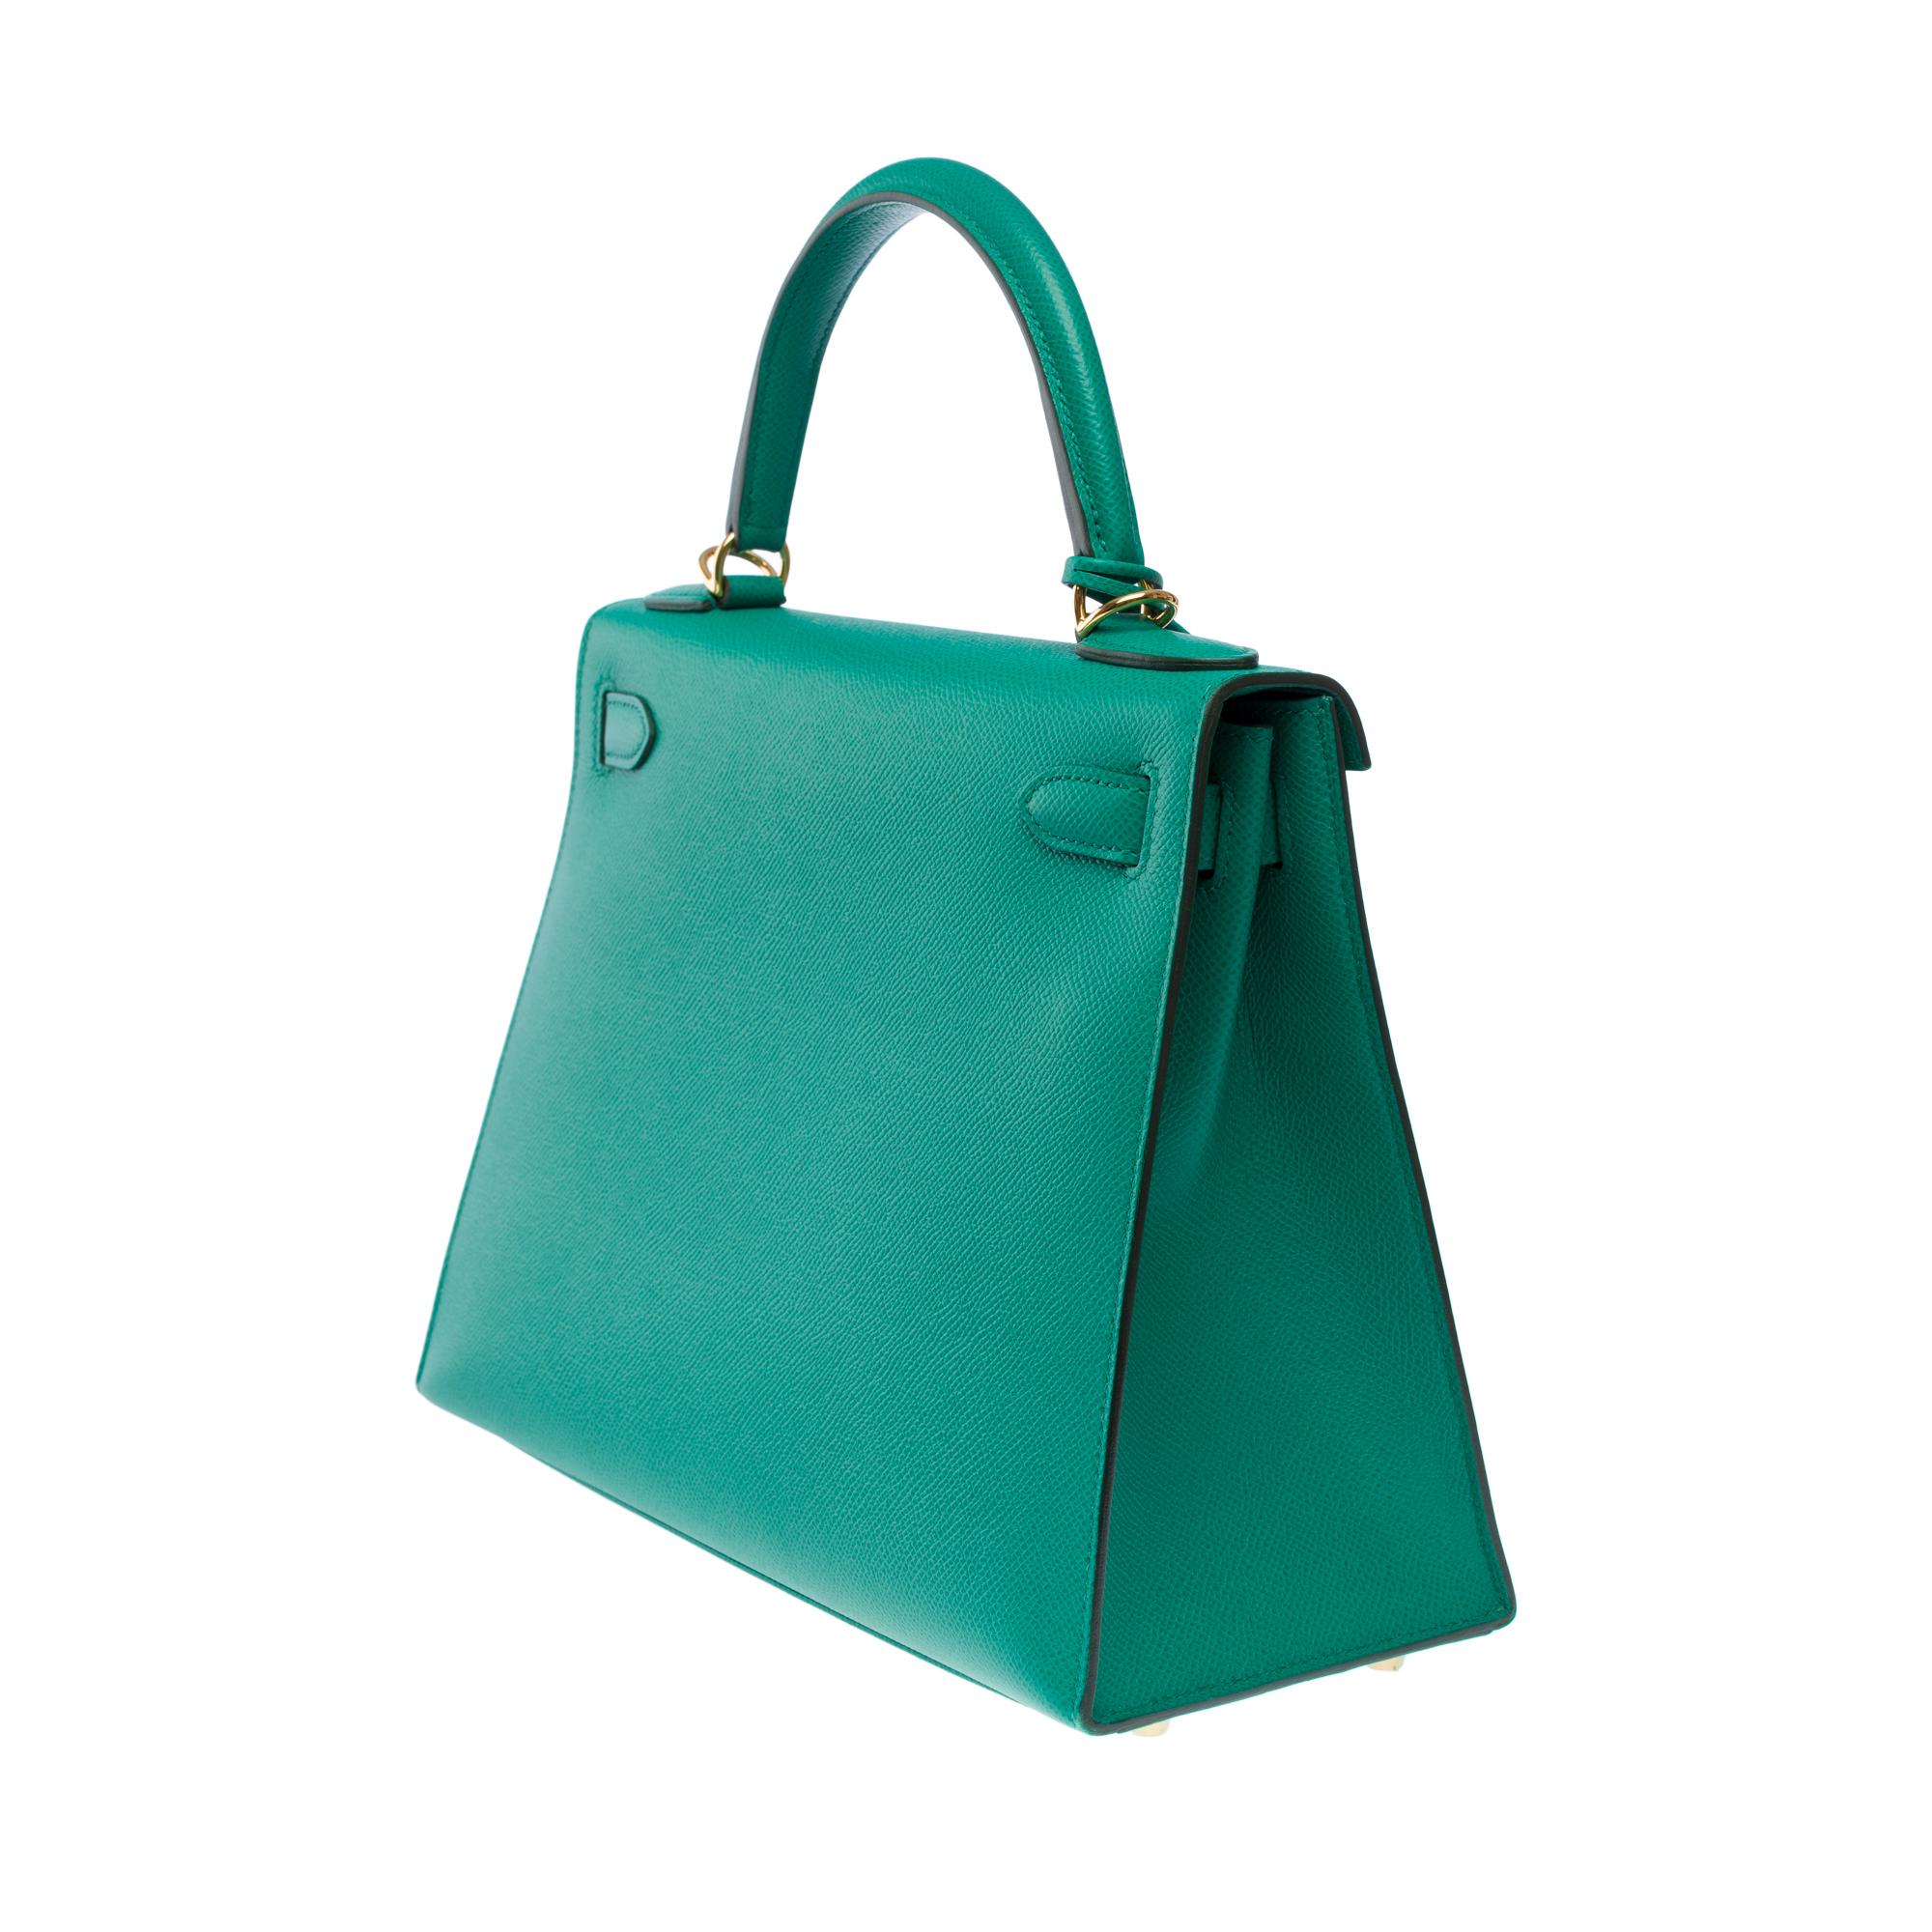 New Hermès Kelly 28 sellier handbag strap in Vert Jade Epsom leather, GHW For Sale 2